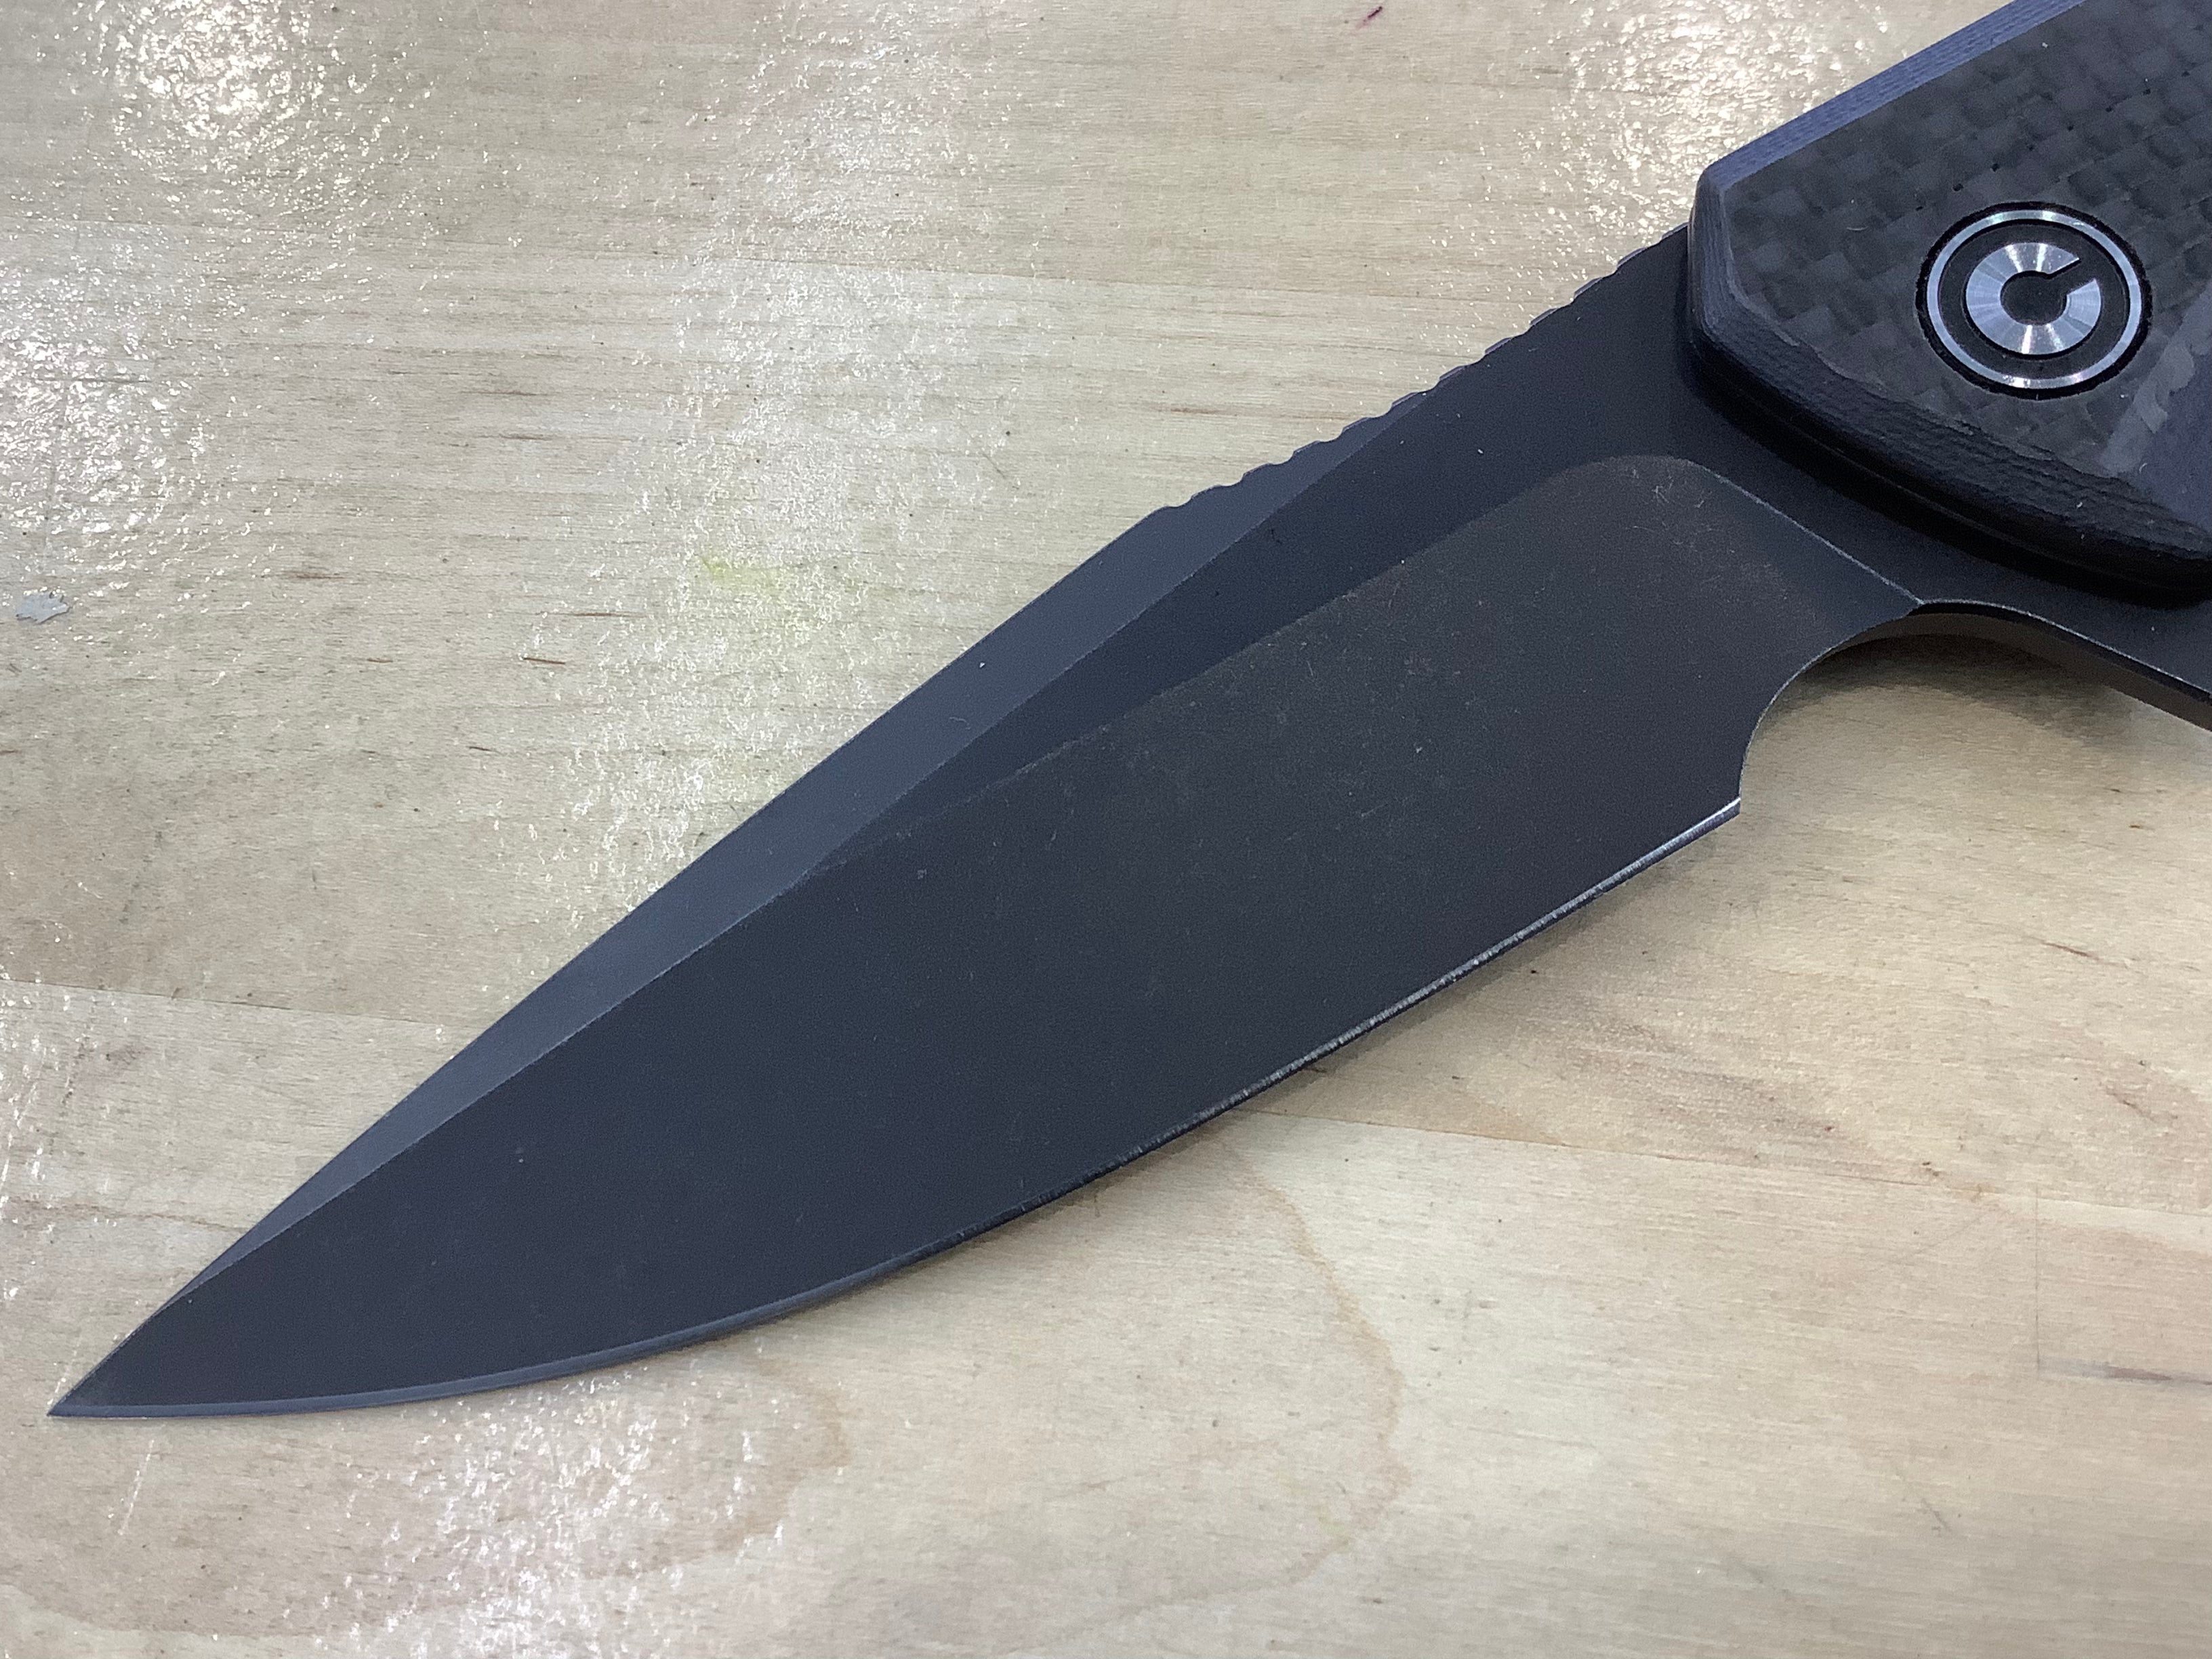 CIVIVI Baklash Flipper Knife G10 & Carbon Fiber Handle (3.5" 9Cr18MoV Blade) C801I